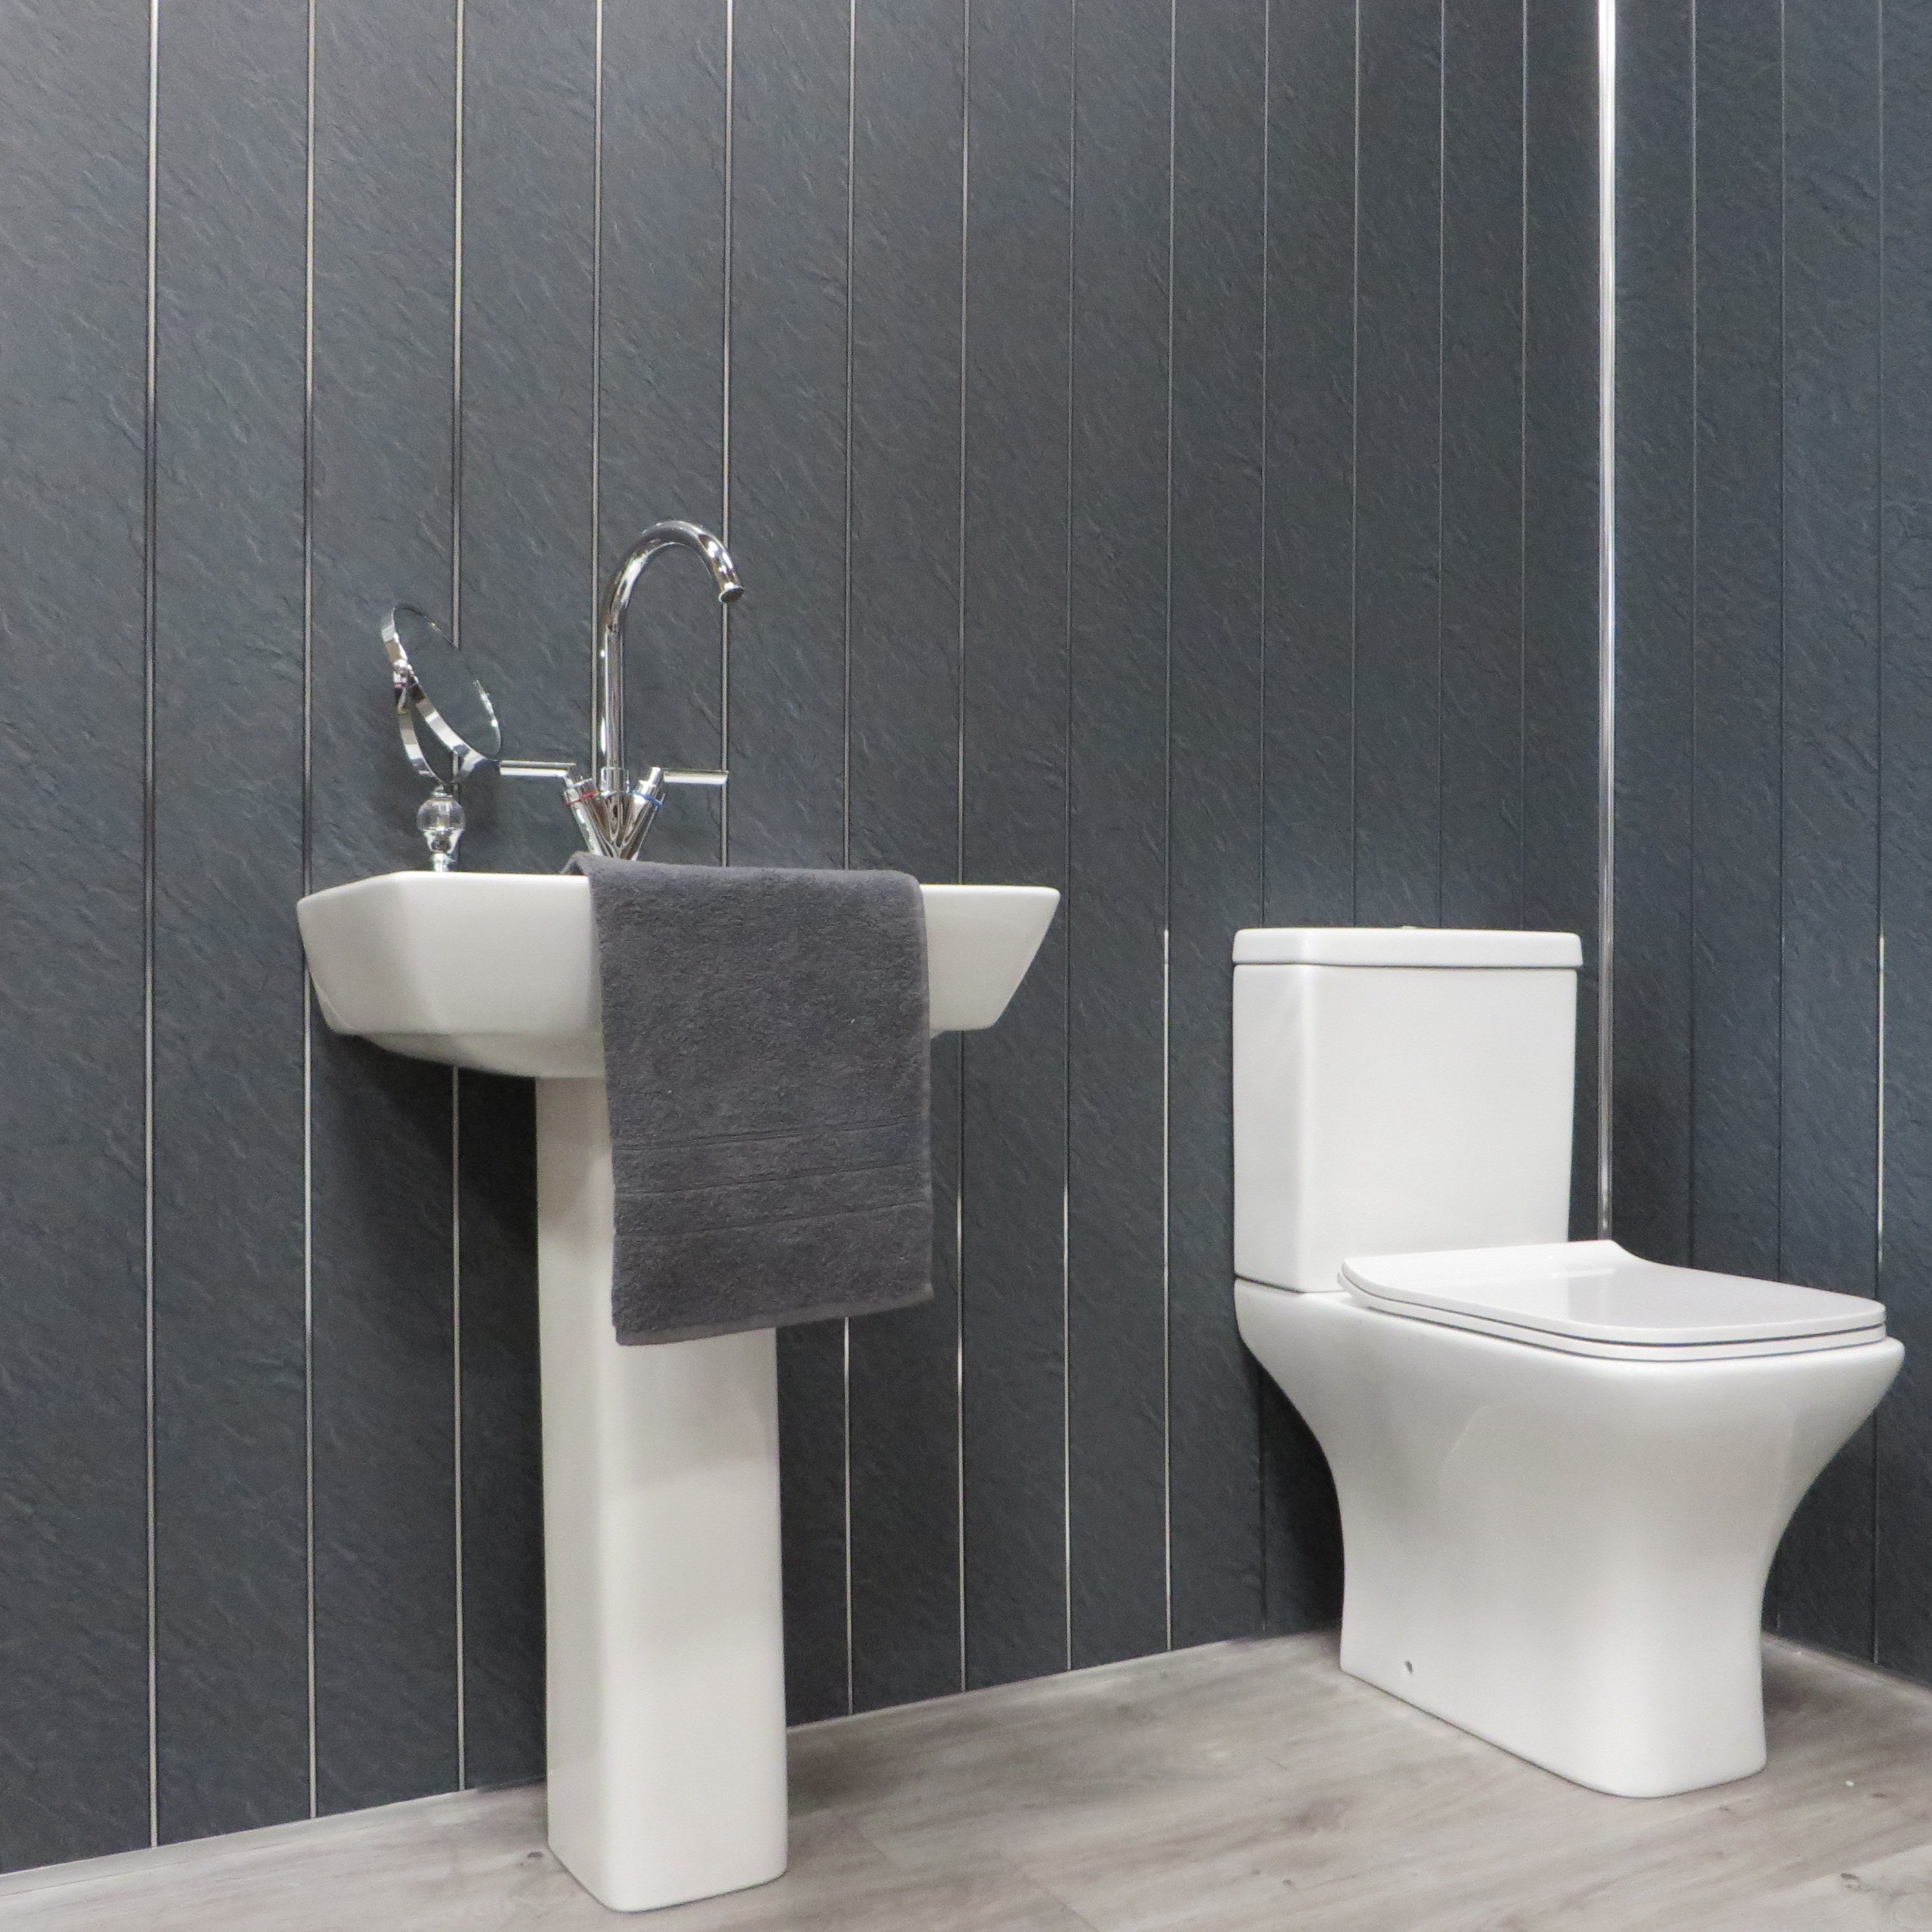 Hewn Slate & Chrome 5mm Bathroom Cladding PVC Wall Panels - 0